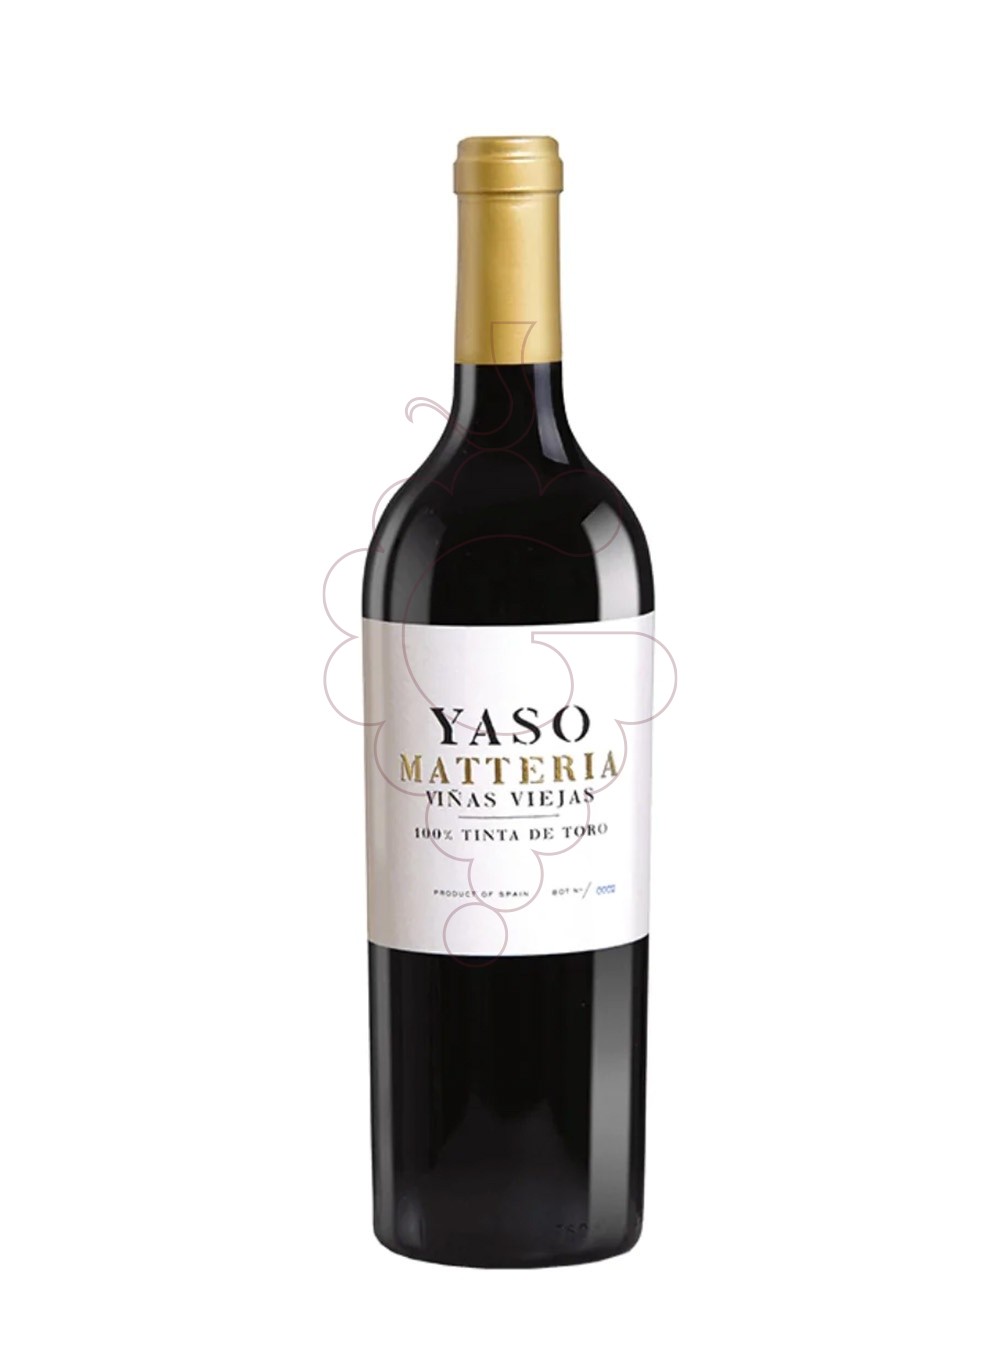 Photo Yaso matteria vi?as viejas 15 vin rouge